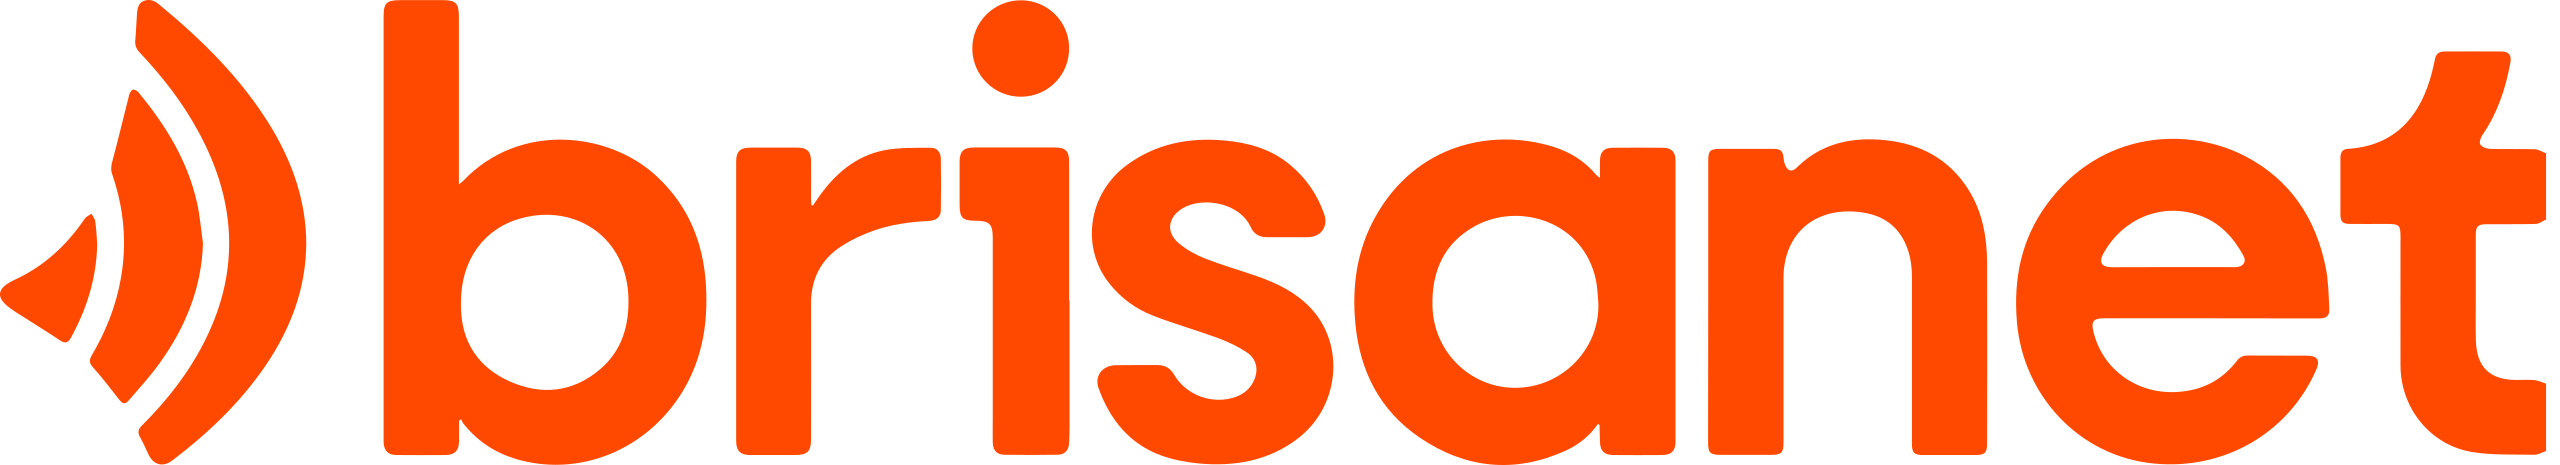 Brisanet_logo.svg